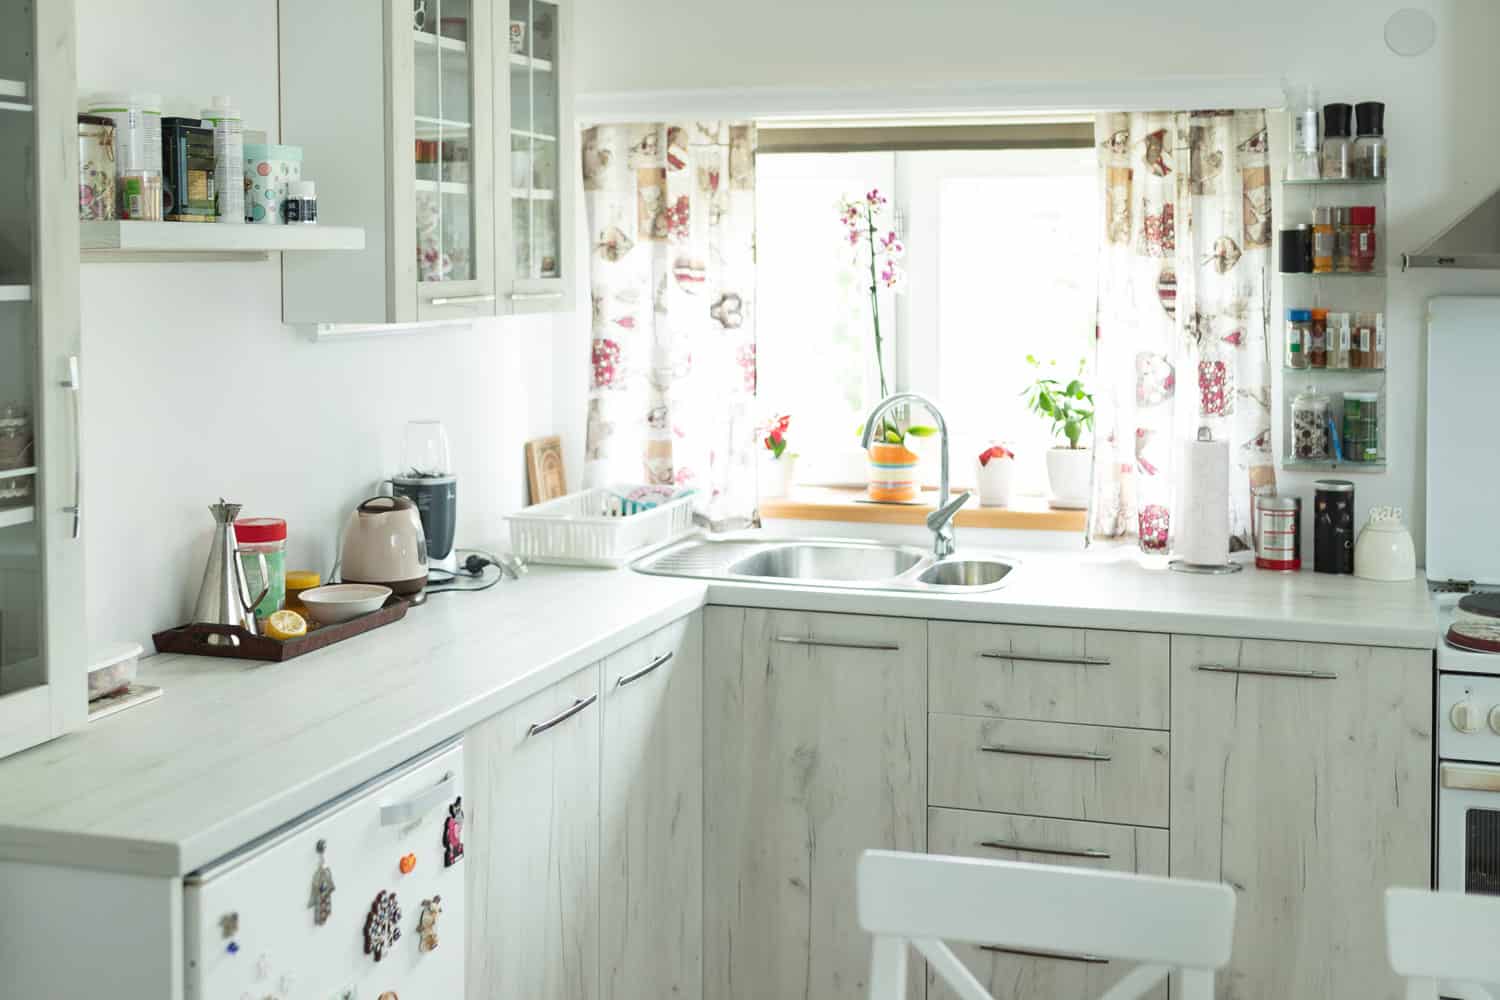 Kitchen Curtains Above The Sink [18 Gorgeous Ideas]   Kitchen Seer